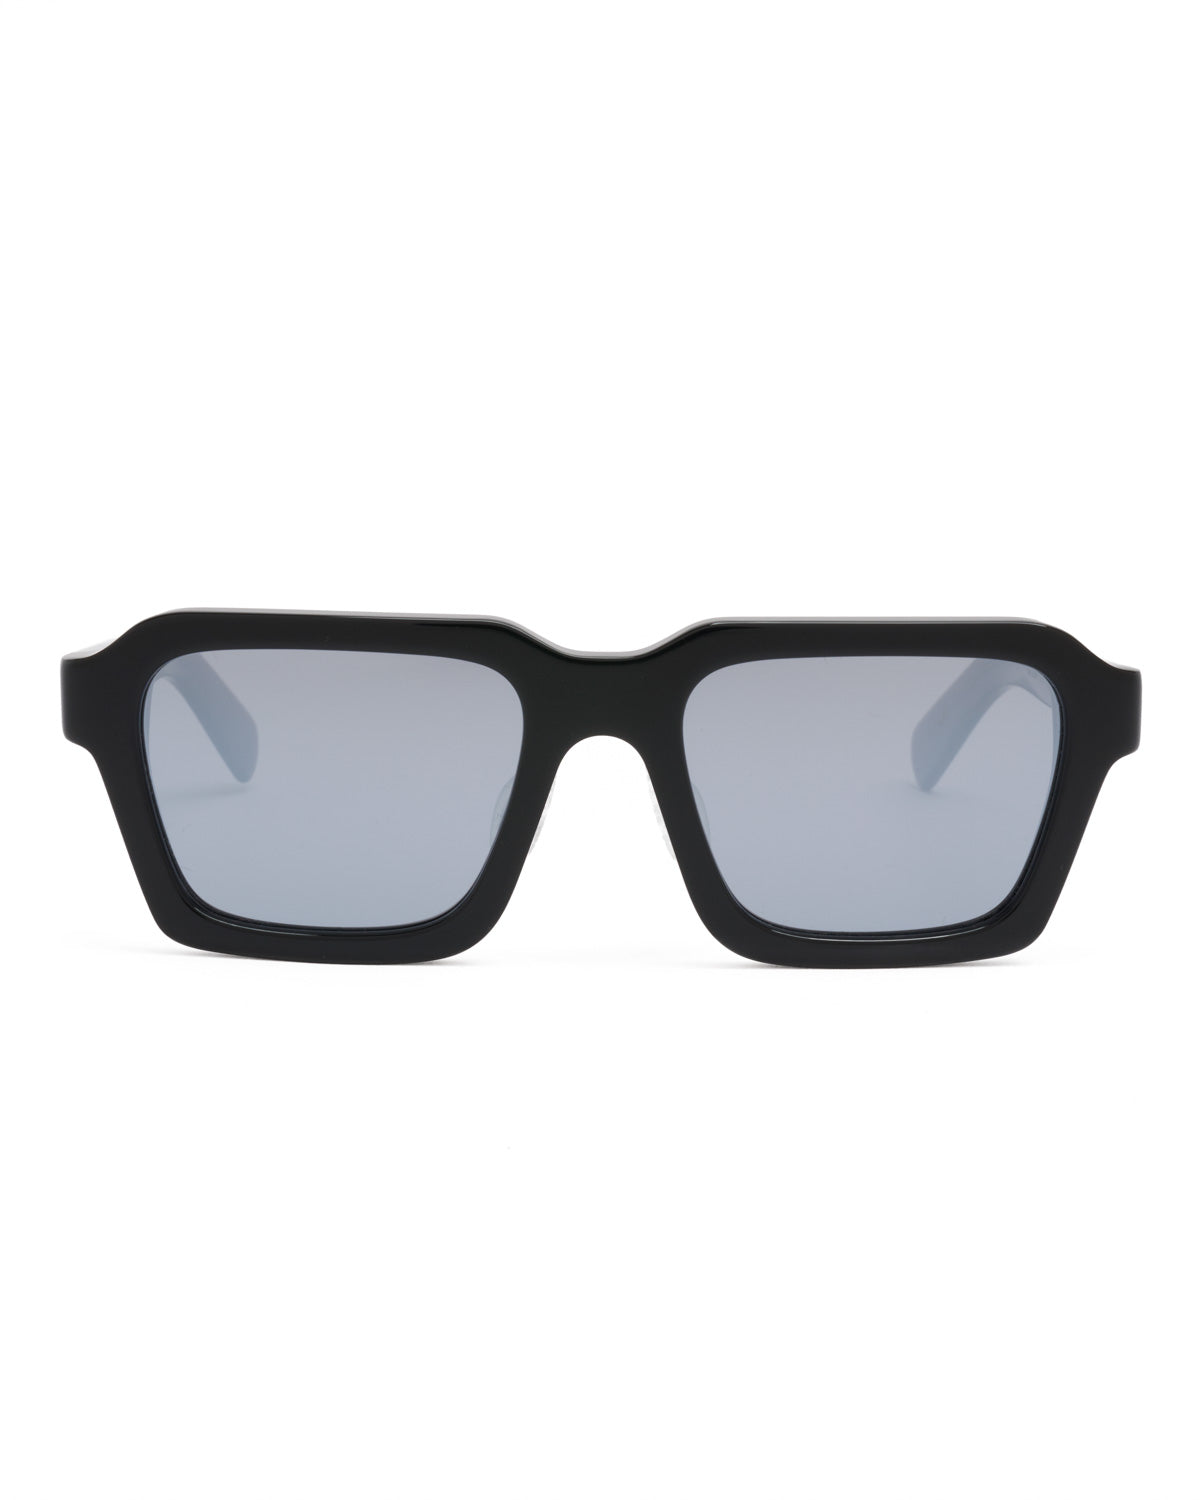 NYLAARN Bio-Black “Lawnmower” Blend Sunglasses - Polarized Gray Gradient +  Black Mirror Lens